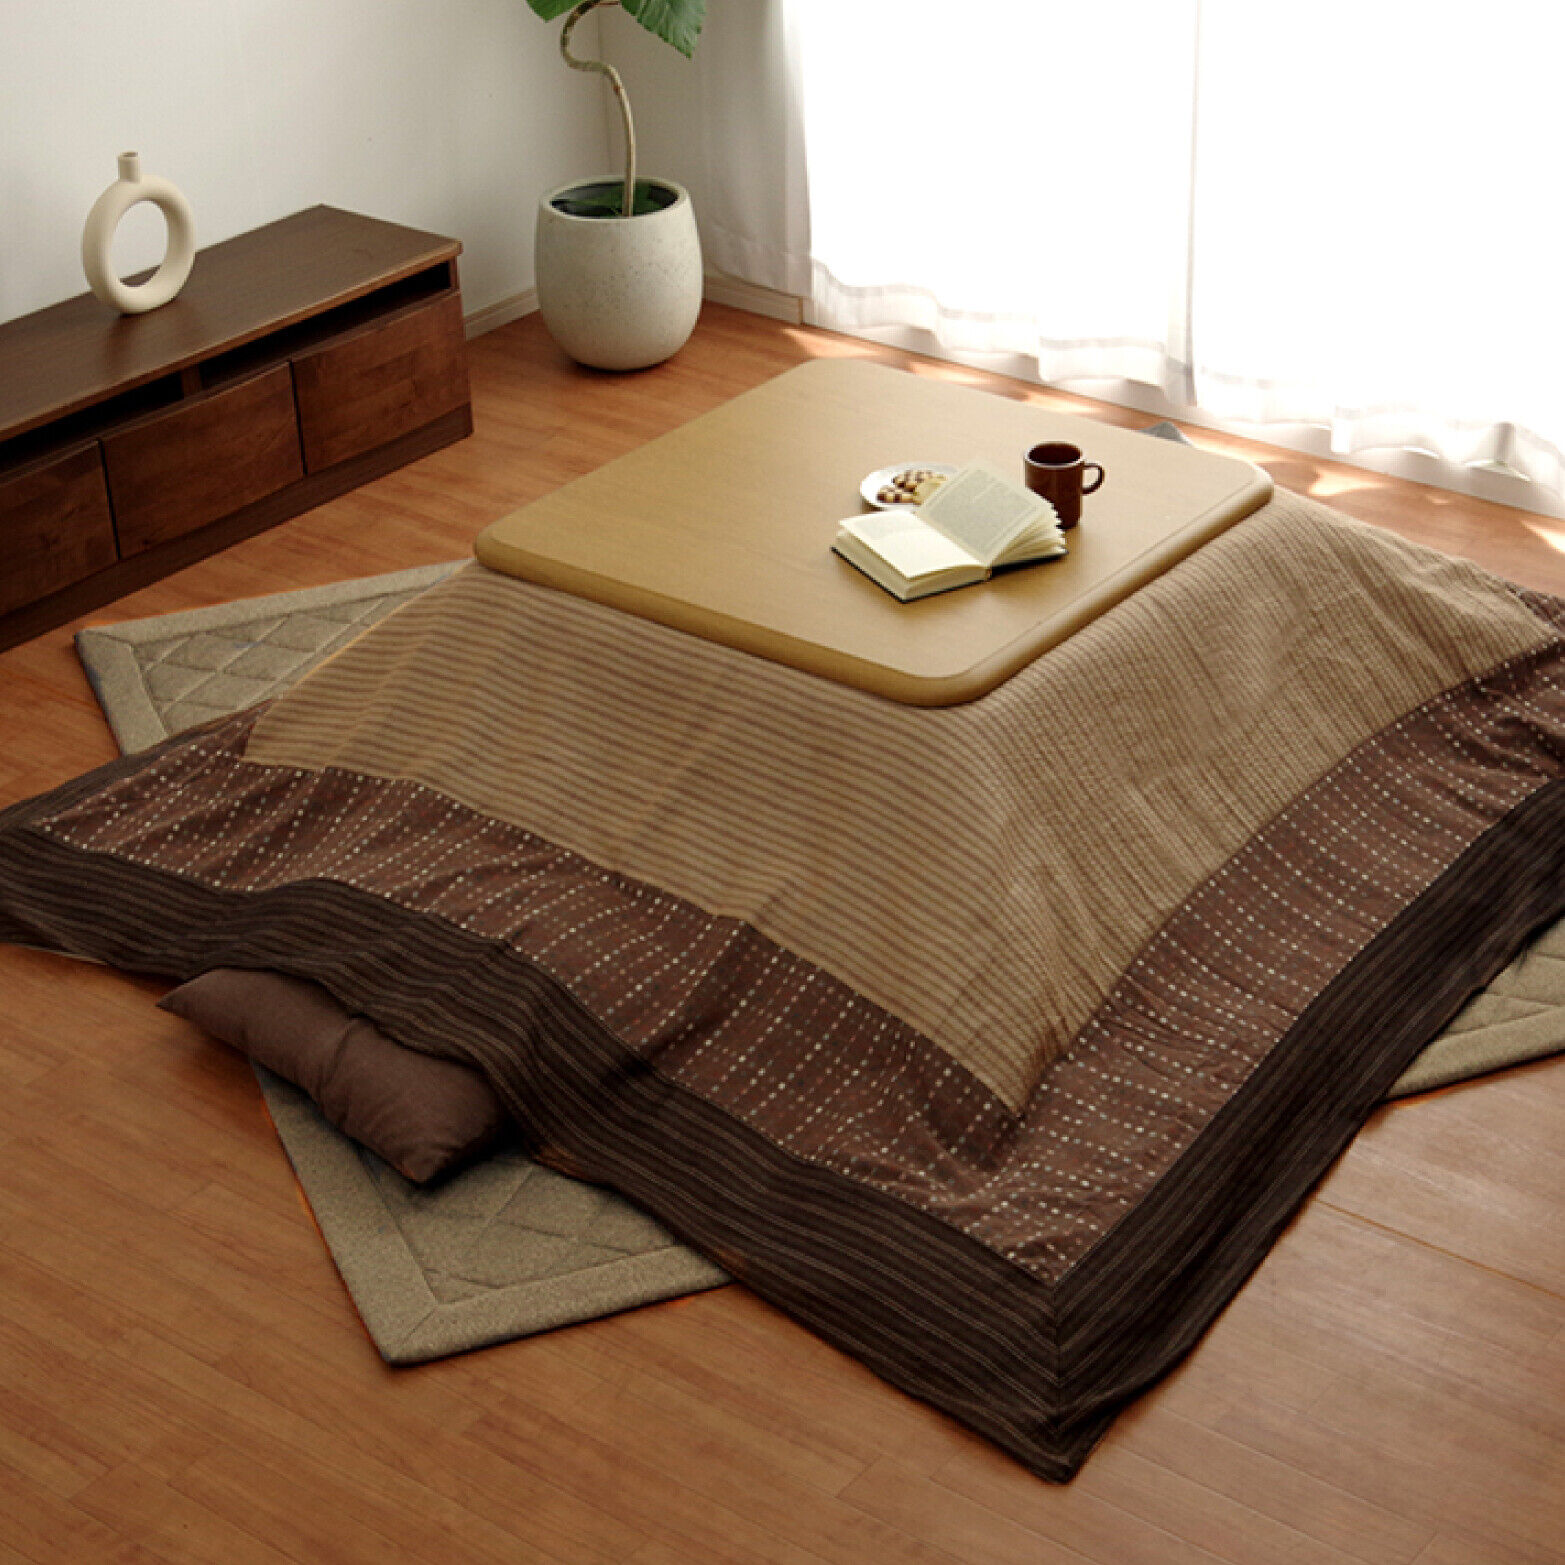 IKEHIKO Cover for Kotatsu Futon Japanese Quilt Cover Comforter Table Brown 1449